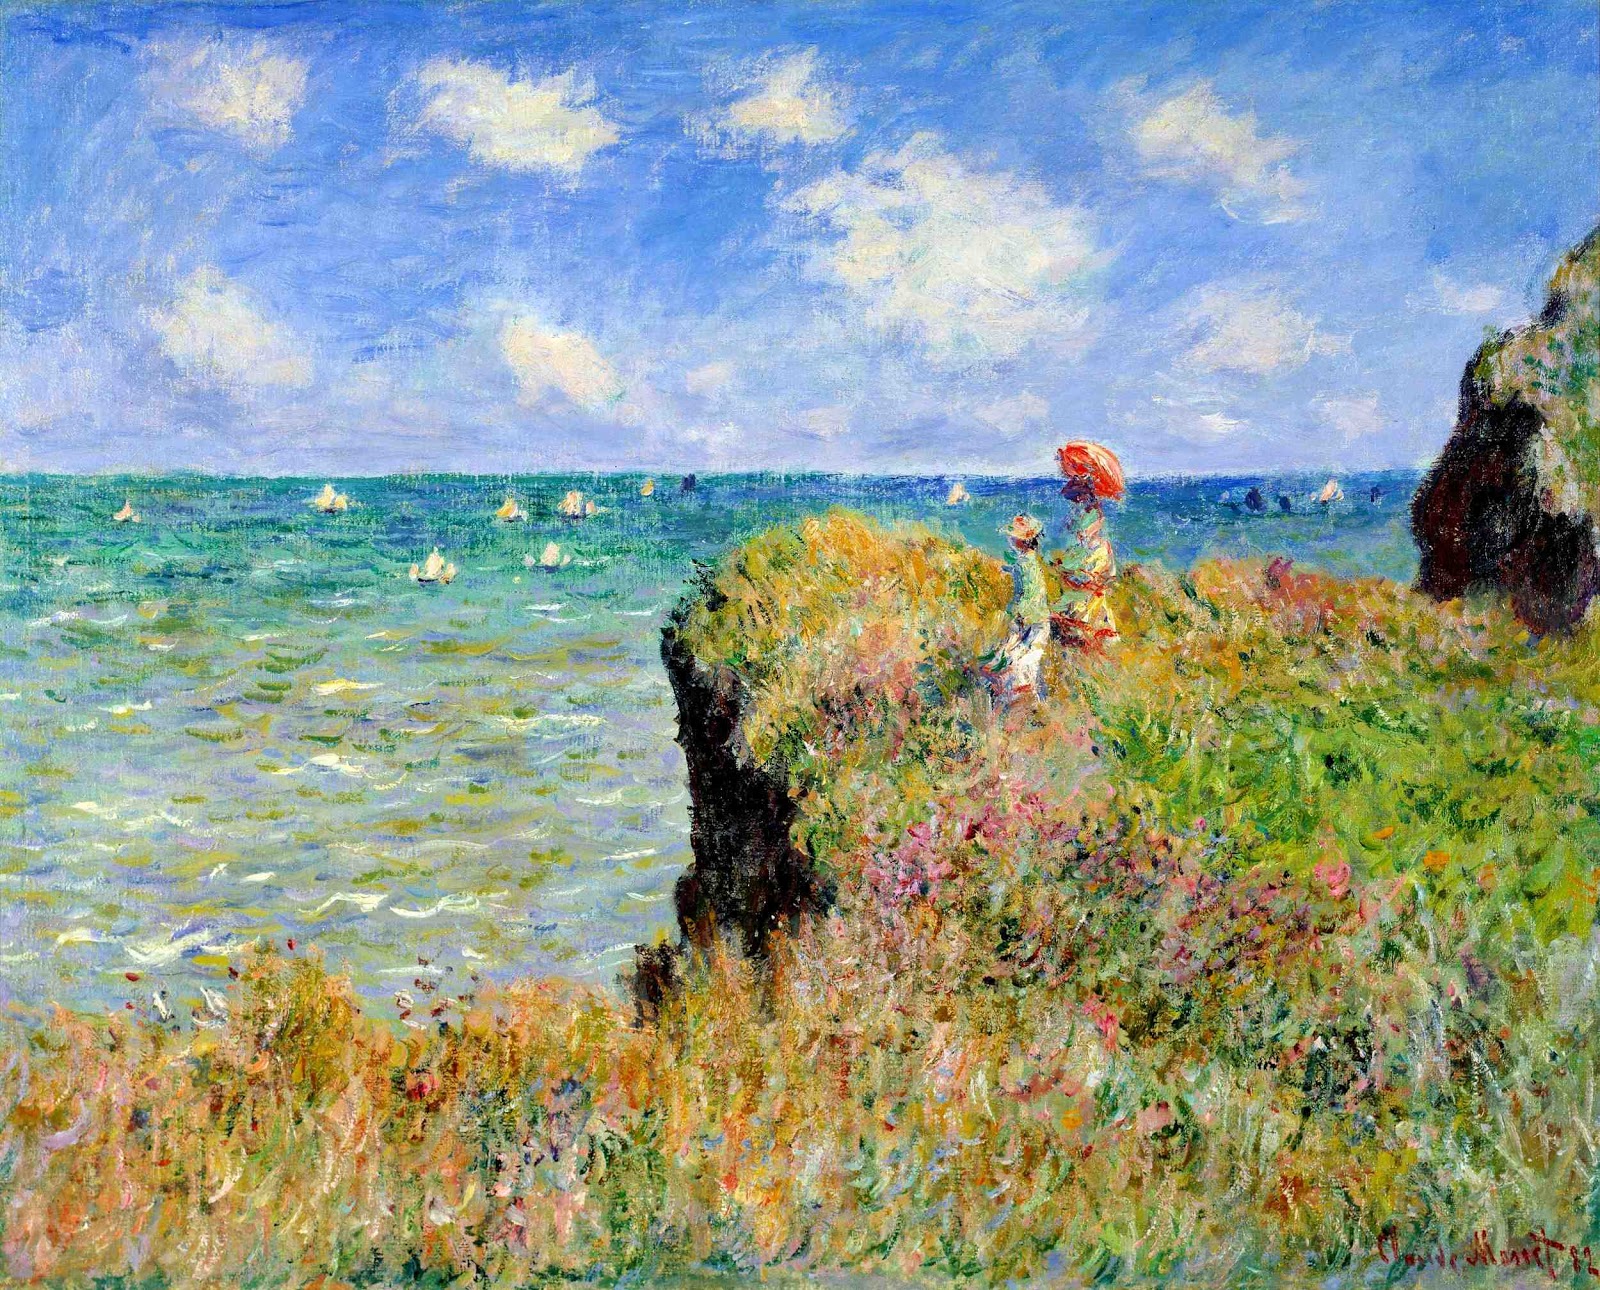 Claude+Monet-1840-1926 (193).jpg